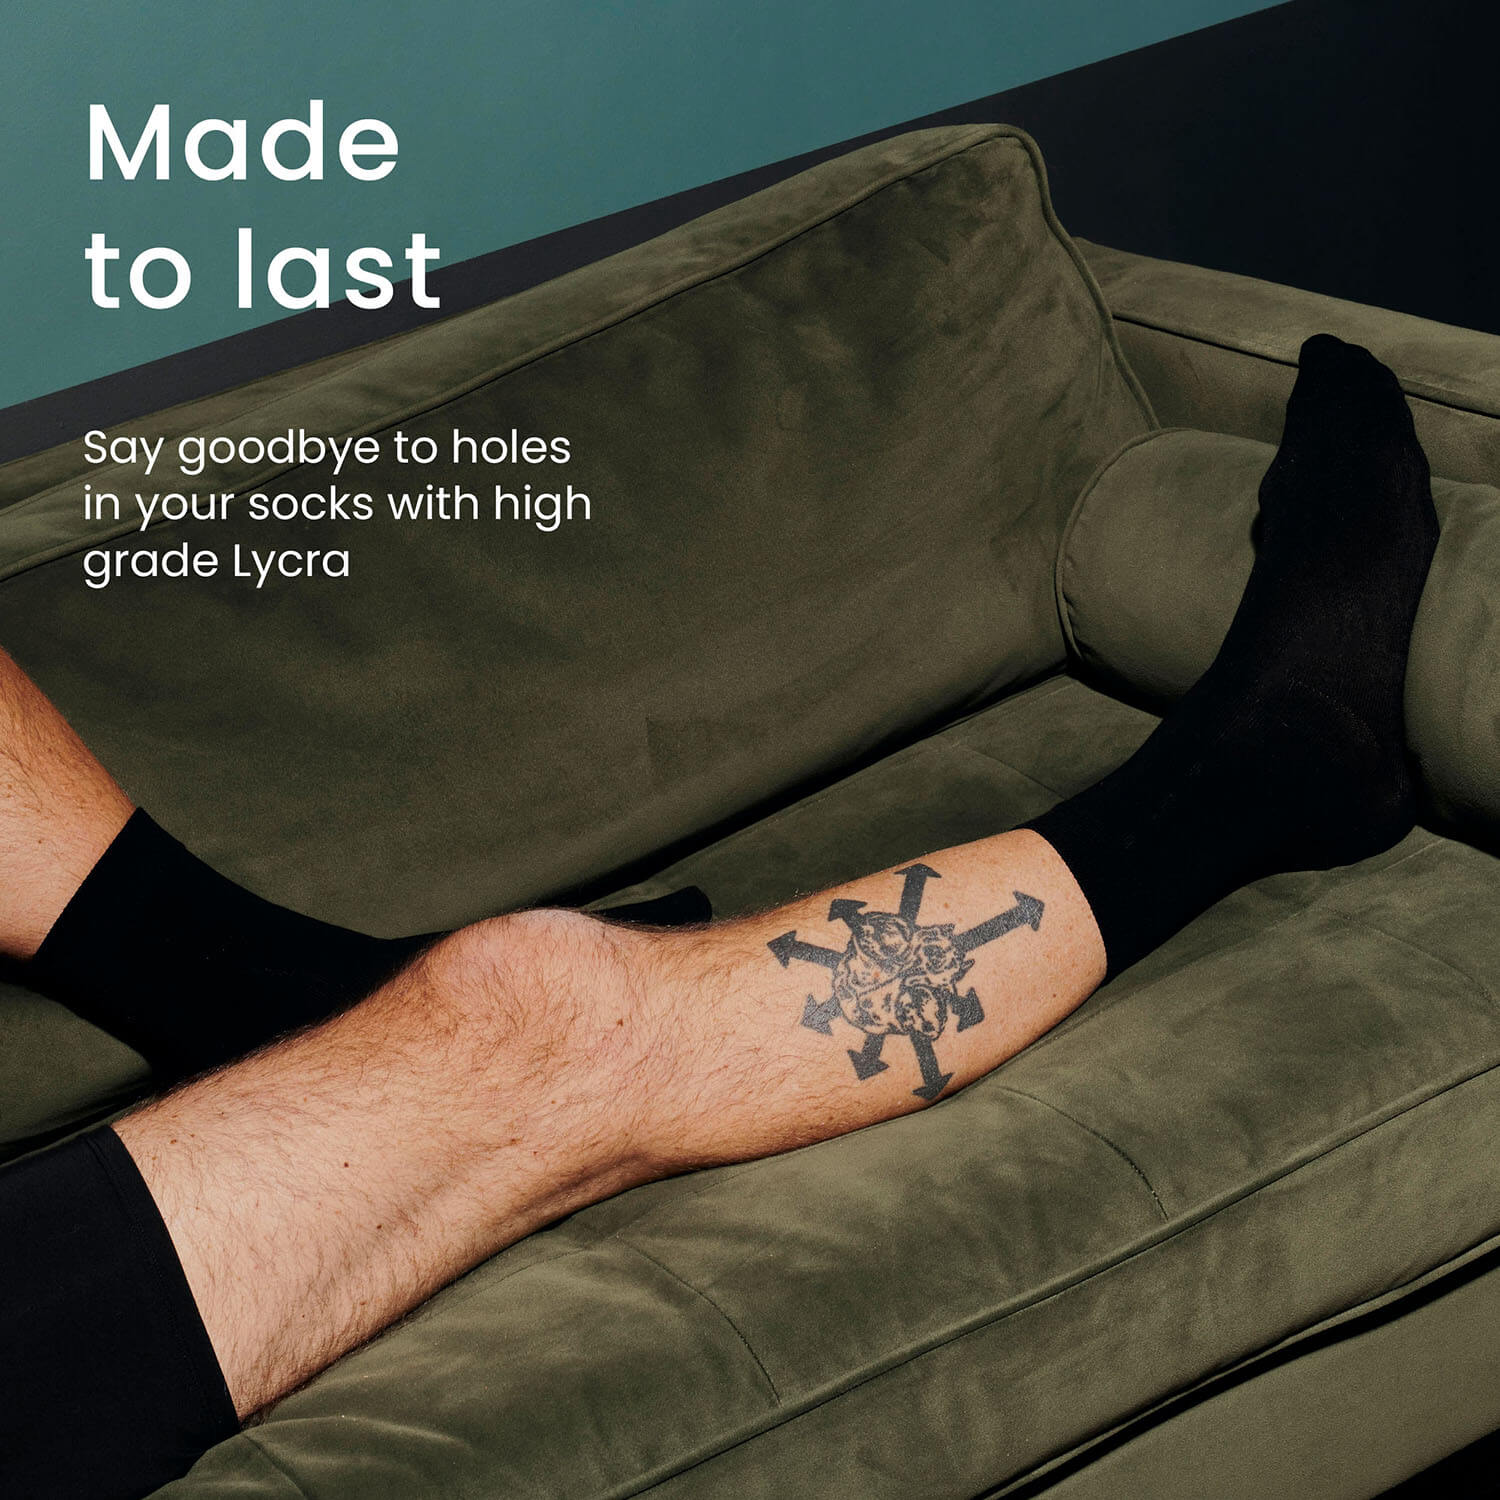 MicroModal Socks (color - Black, Cobalt & Charcoal)